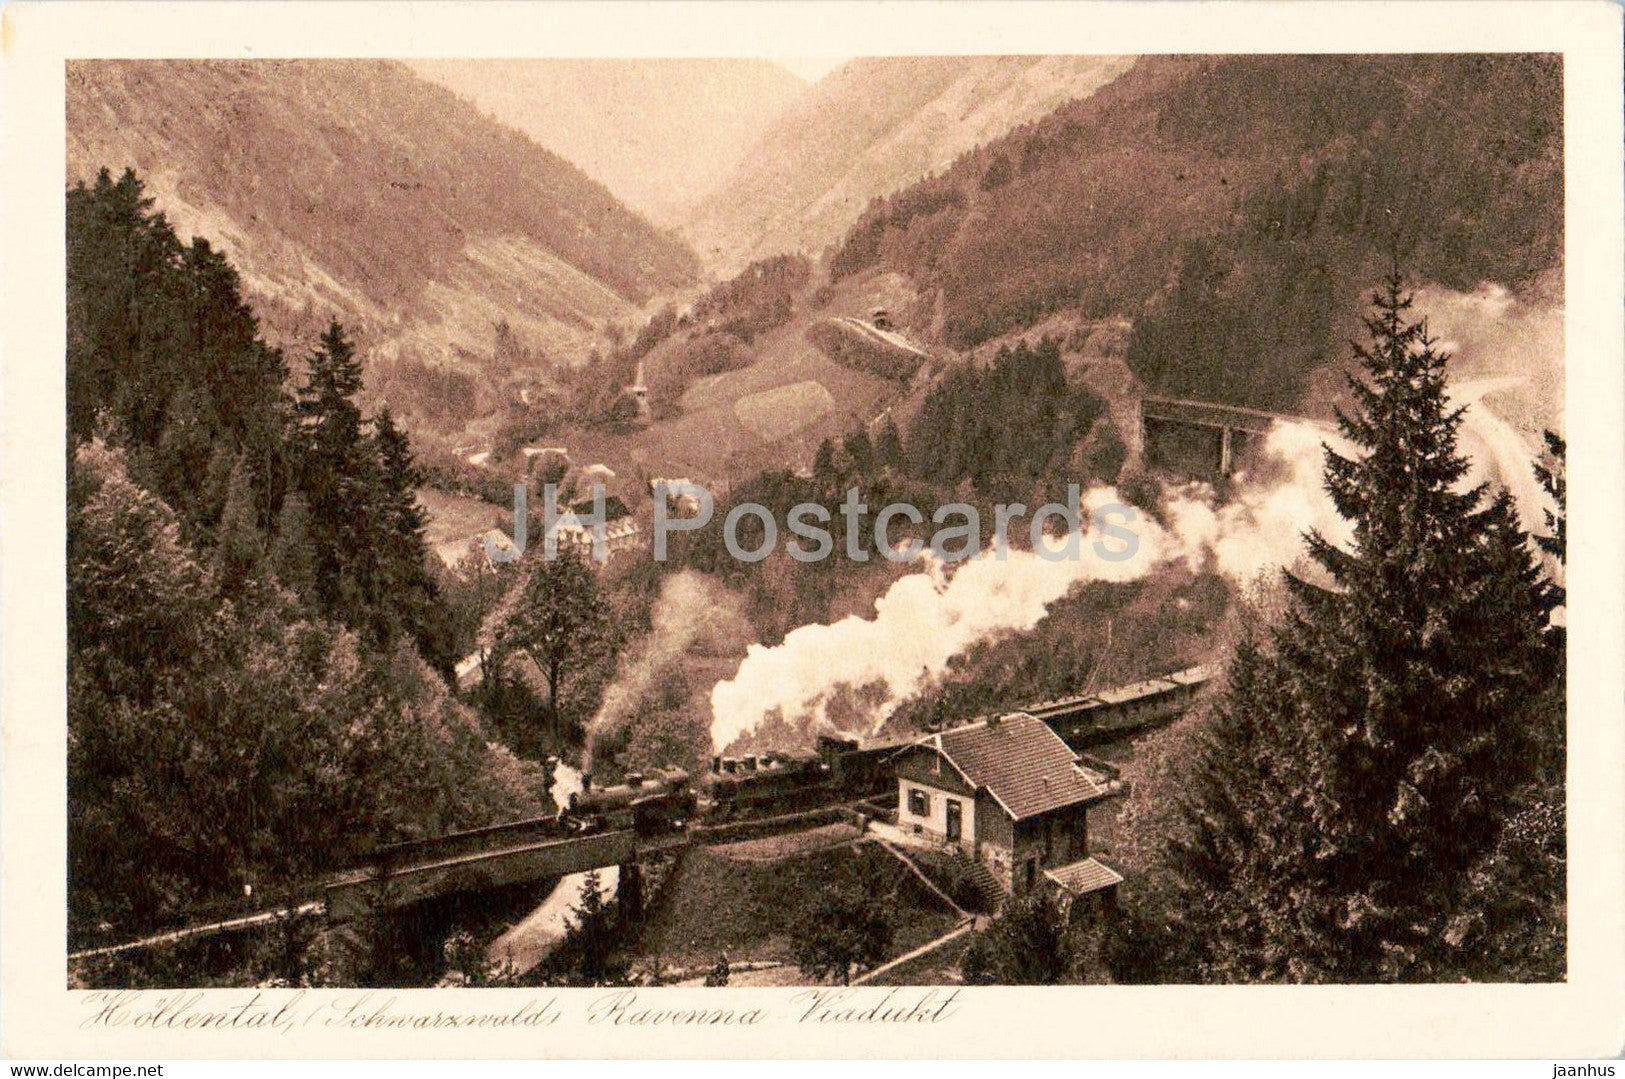 Hollental - Schwarzwald - Ravenna Viadukt - train - railway - old postcard - Germany - unused - JH Postcards